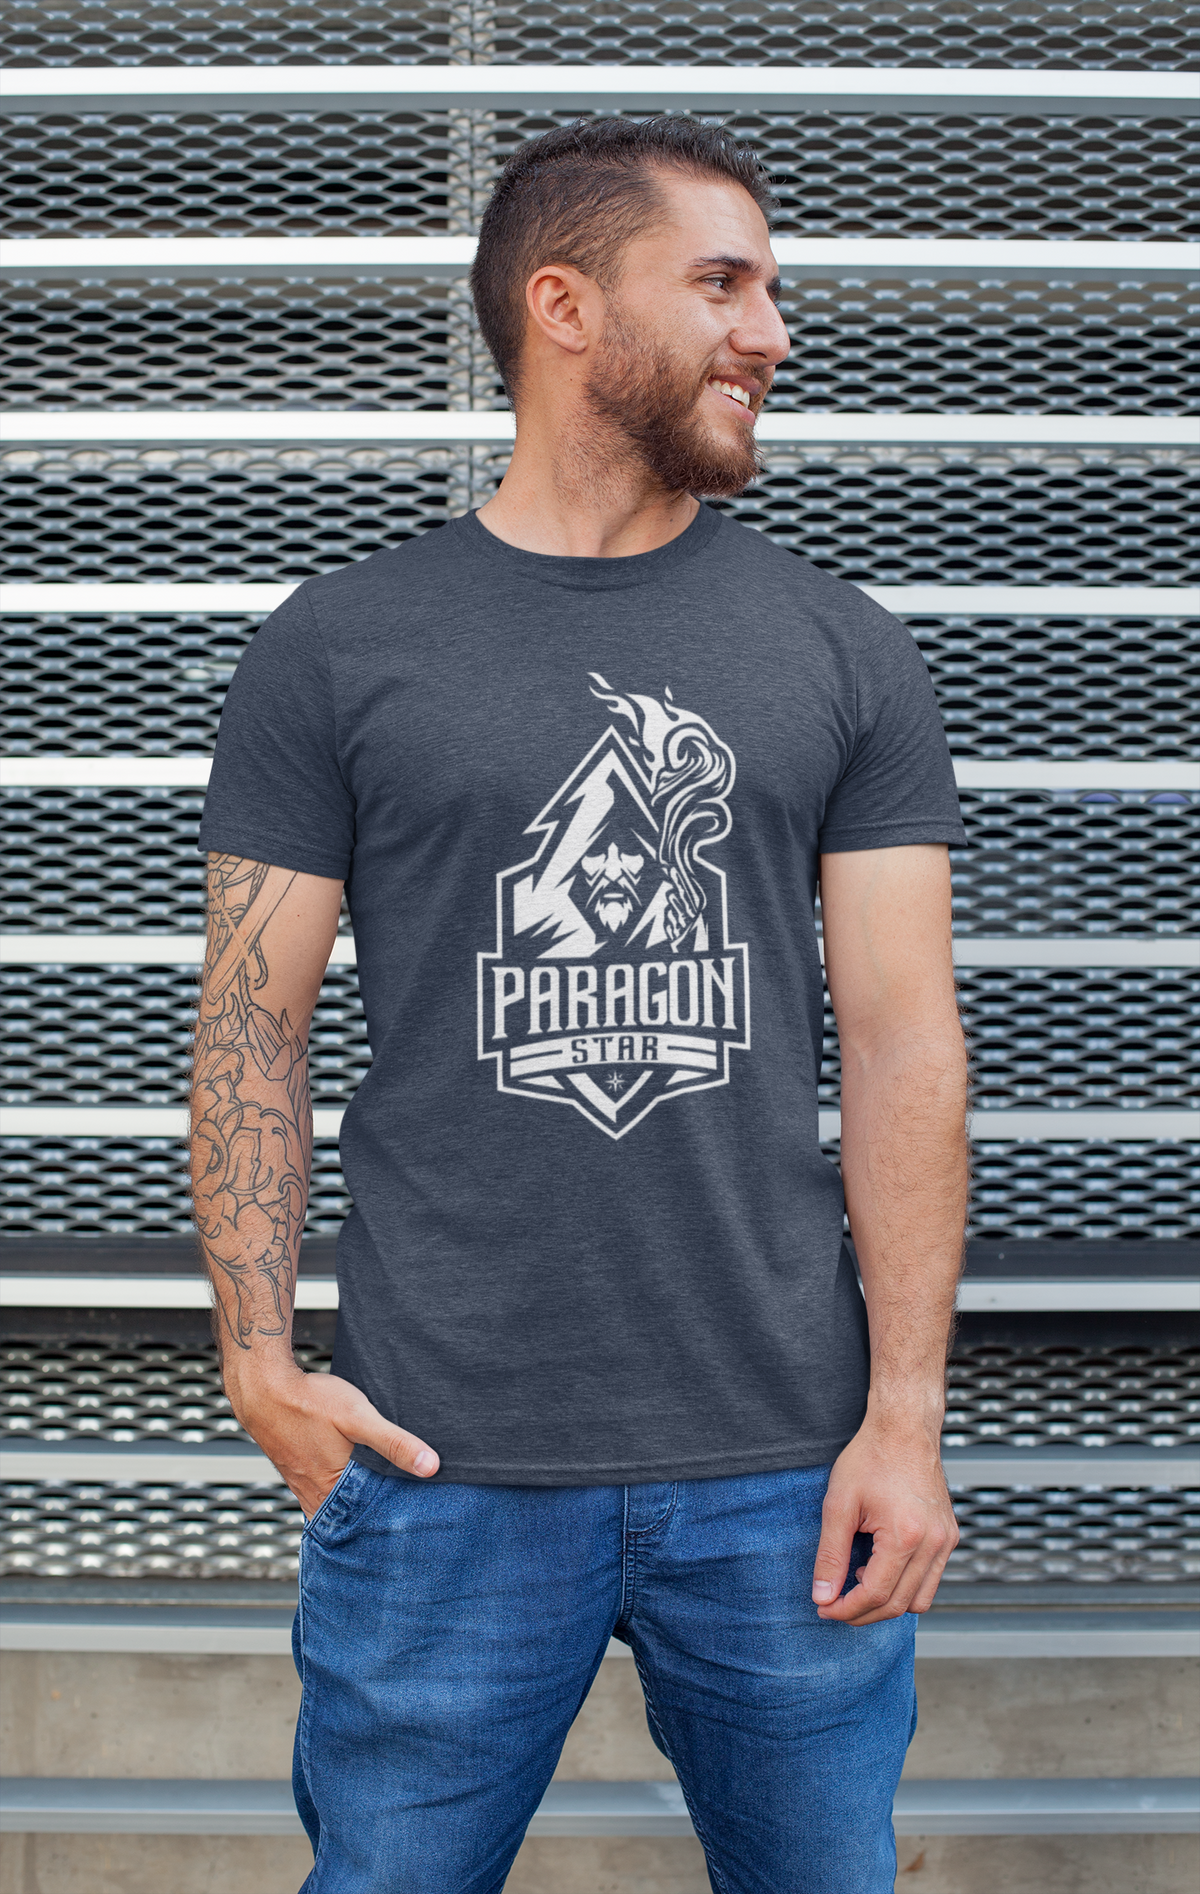 Paragon Star Wizard Themed T Shirt